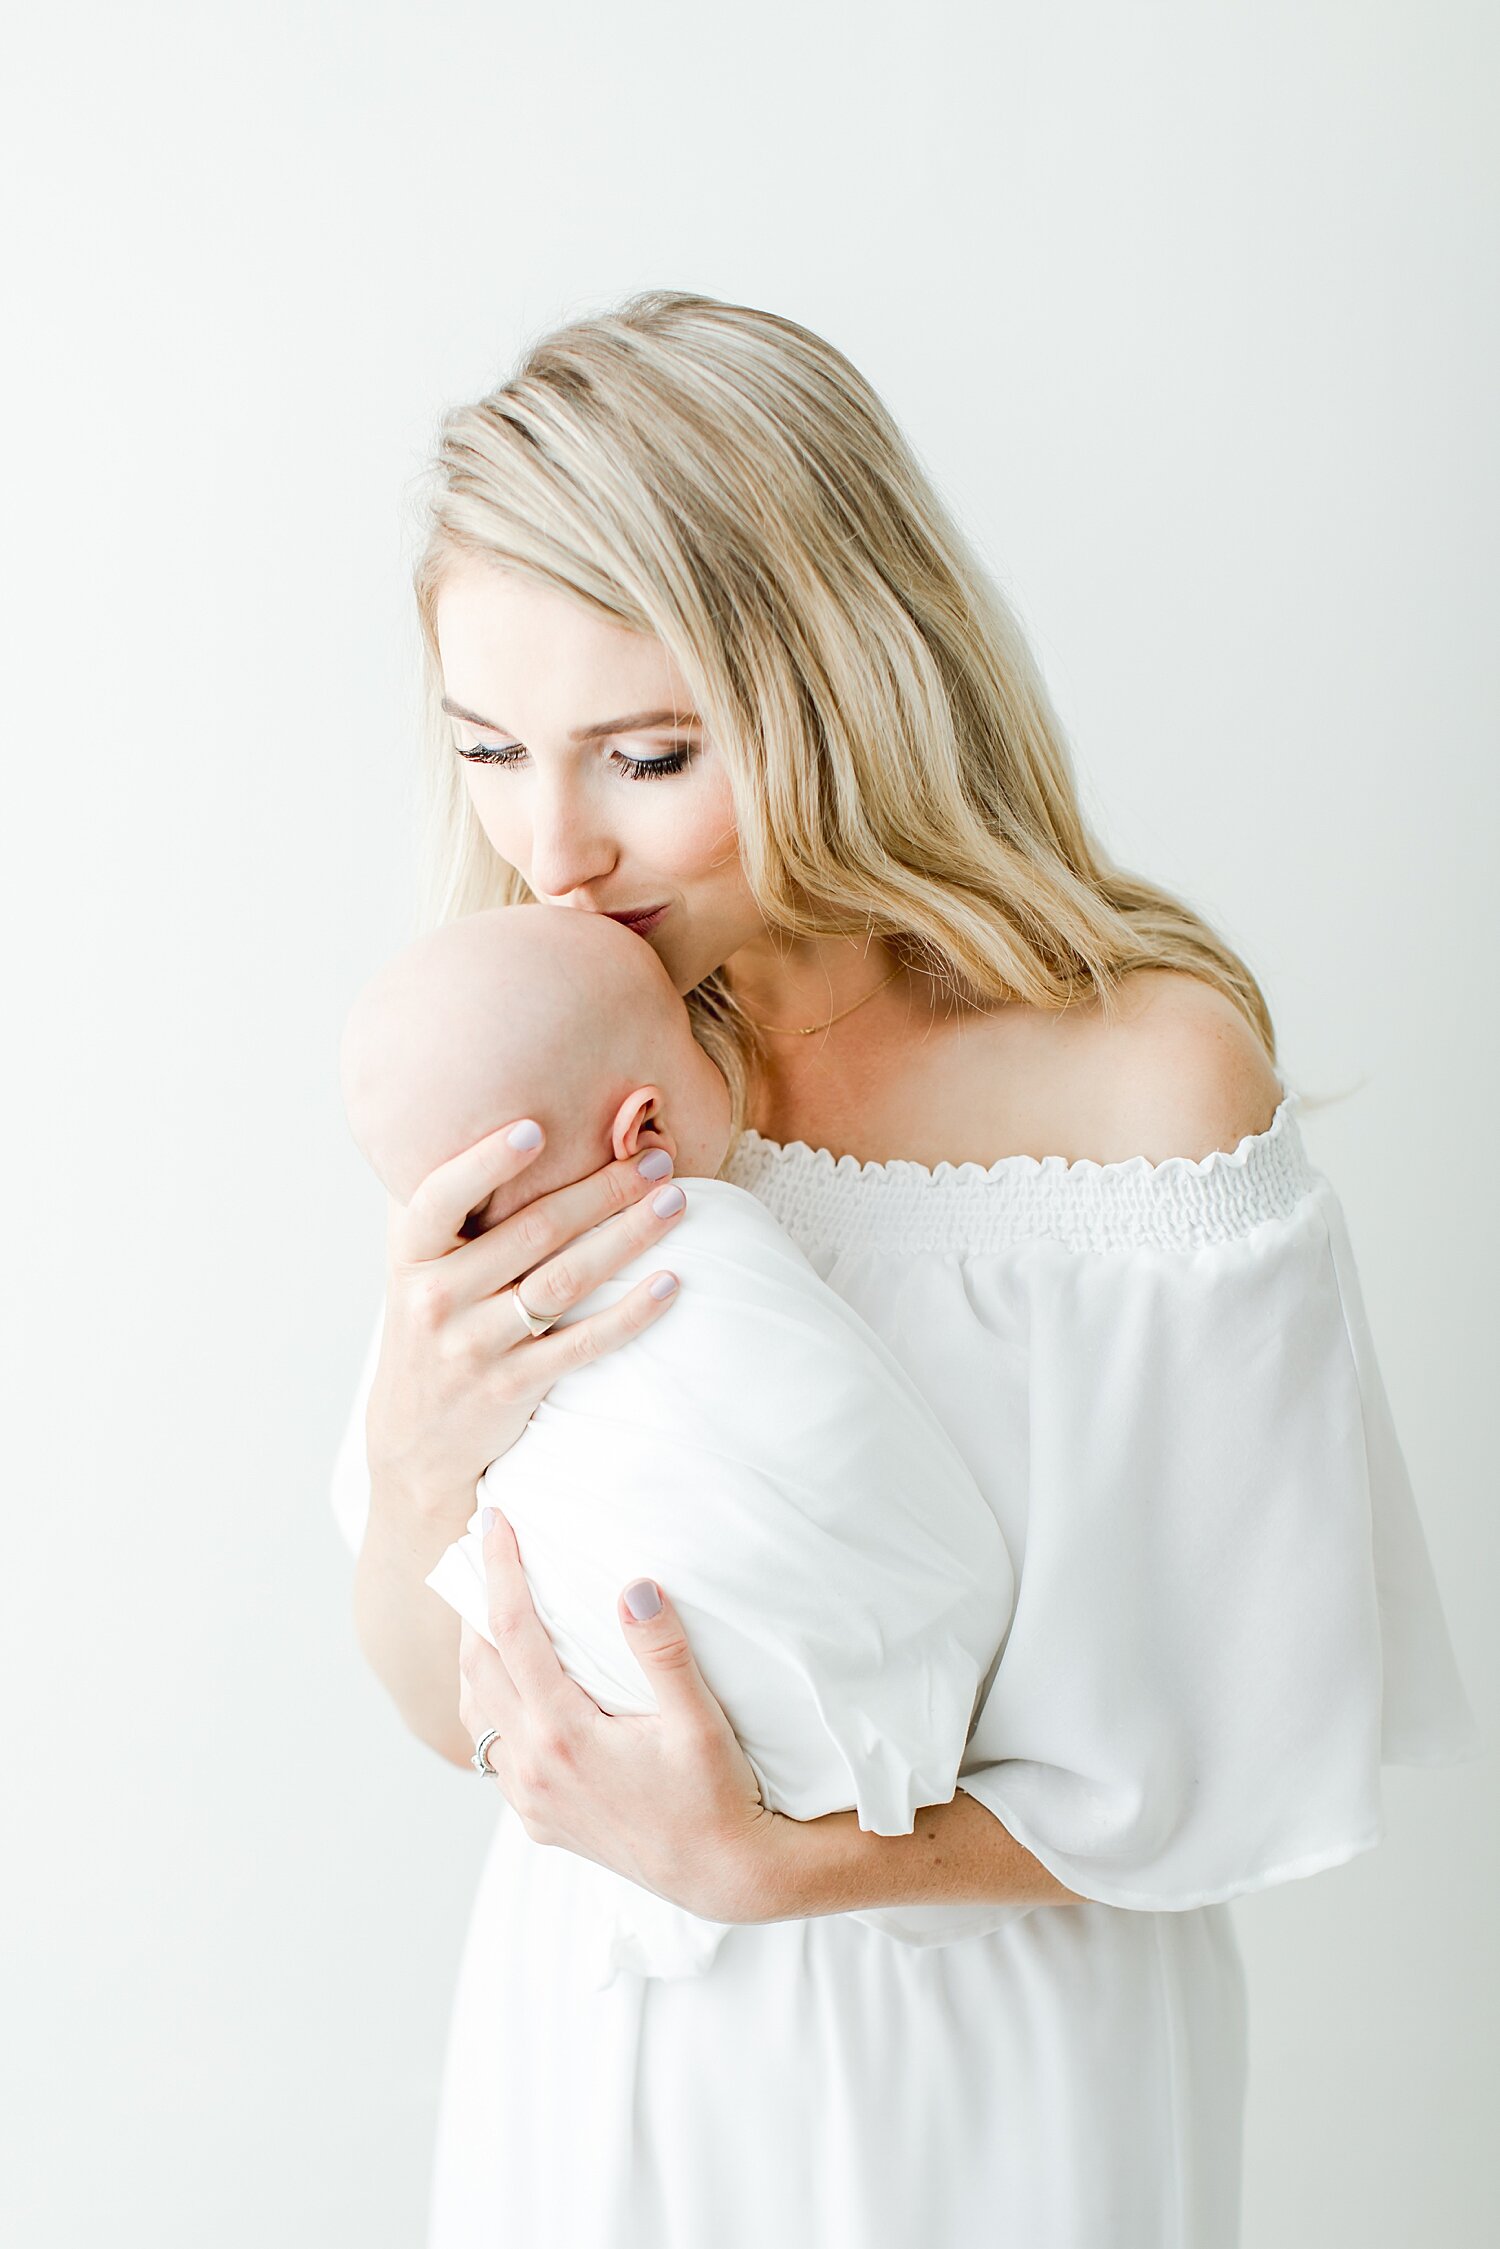 Mama wearing a white dress kissing newborn baby girl. Photos by Greenwich Newborn Photographer, Kristin Wood Photography. 